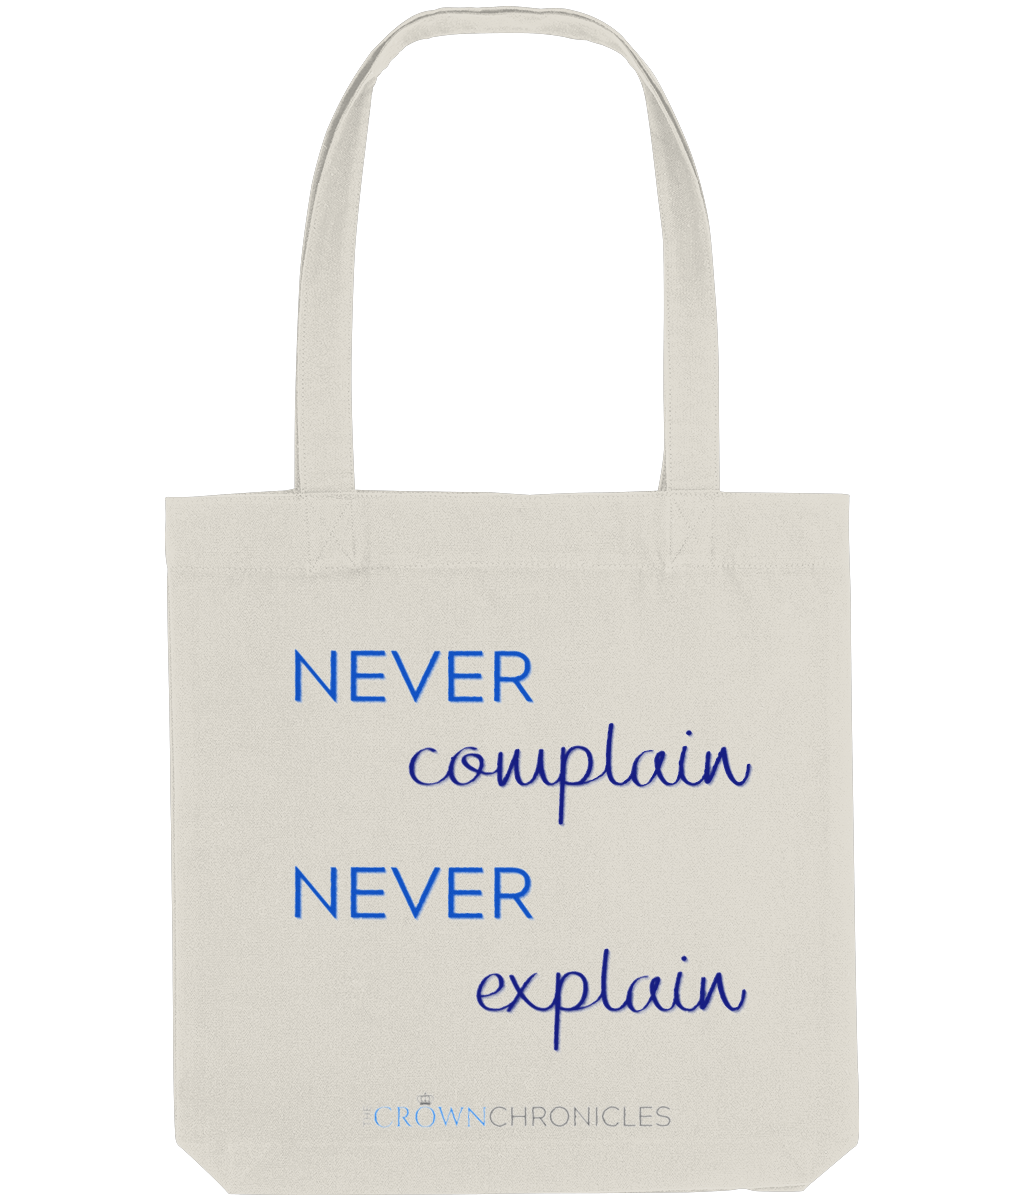 'Never complain' motto tote bag